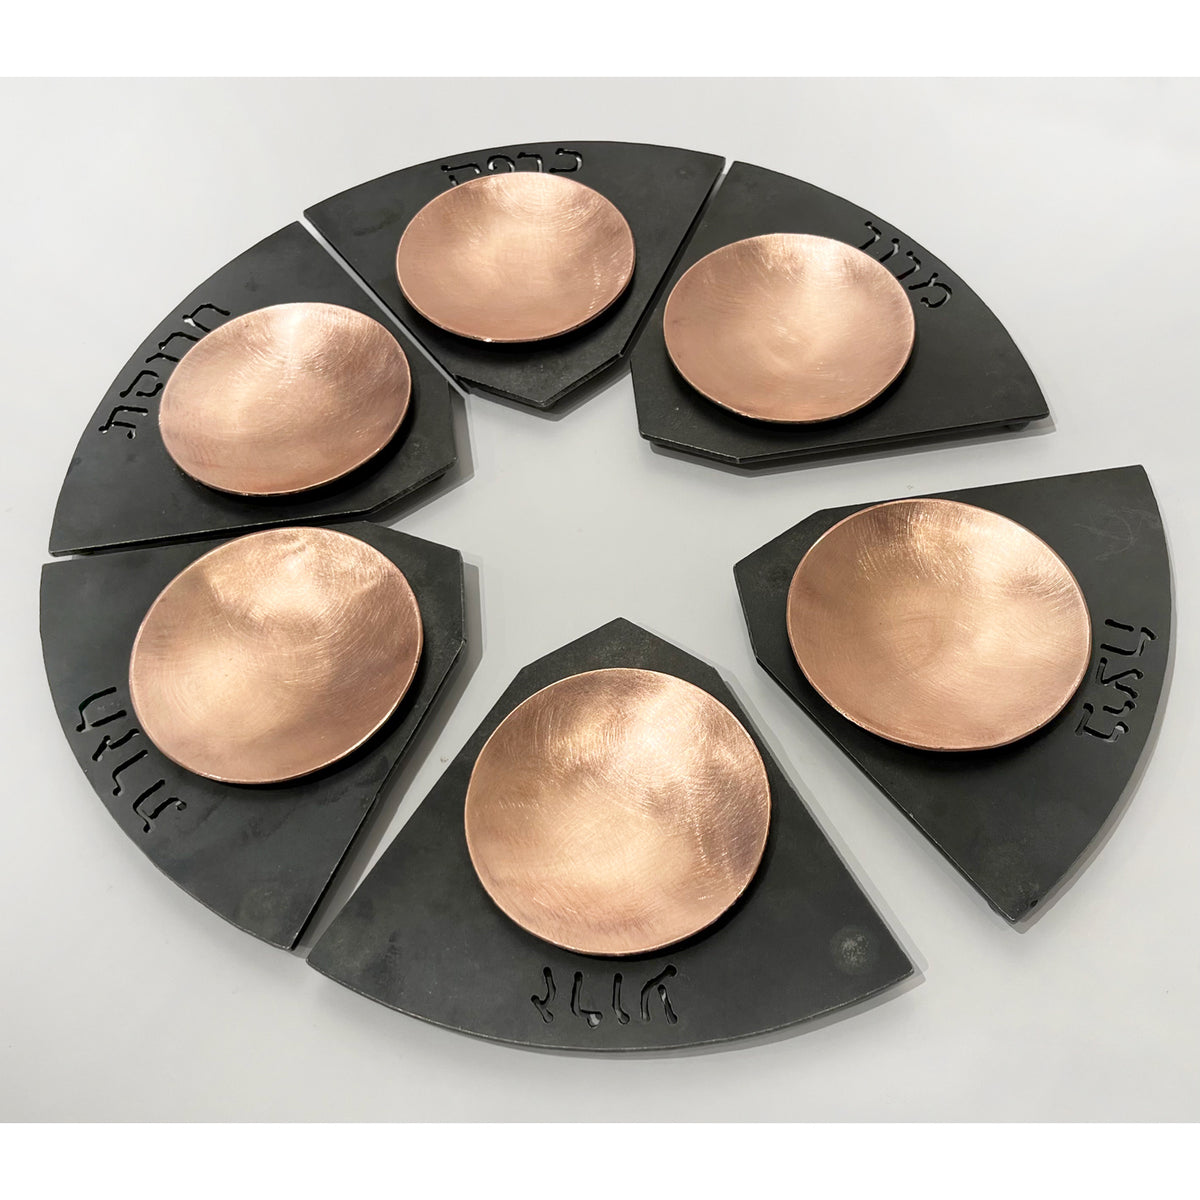 Modular Seder Plate - Copper Plates